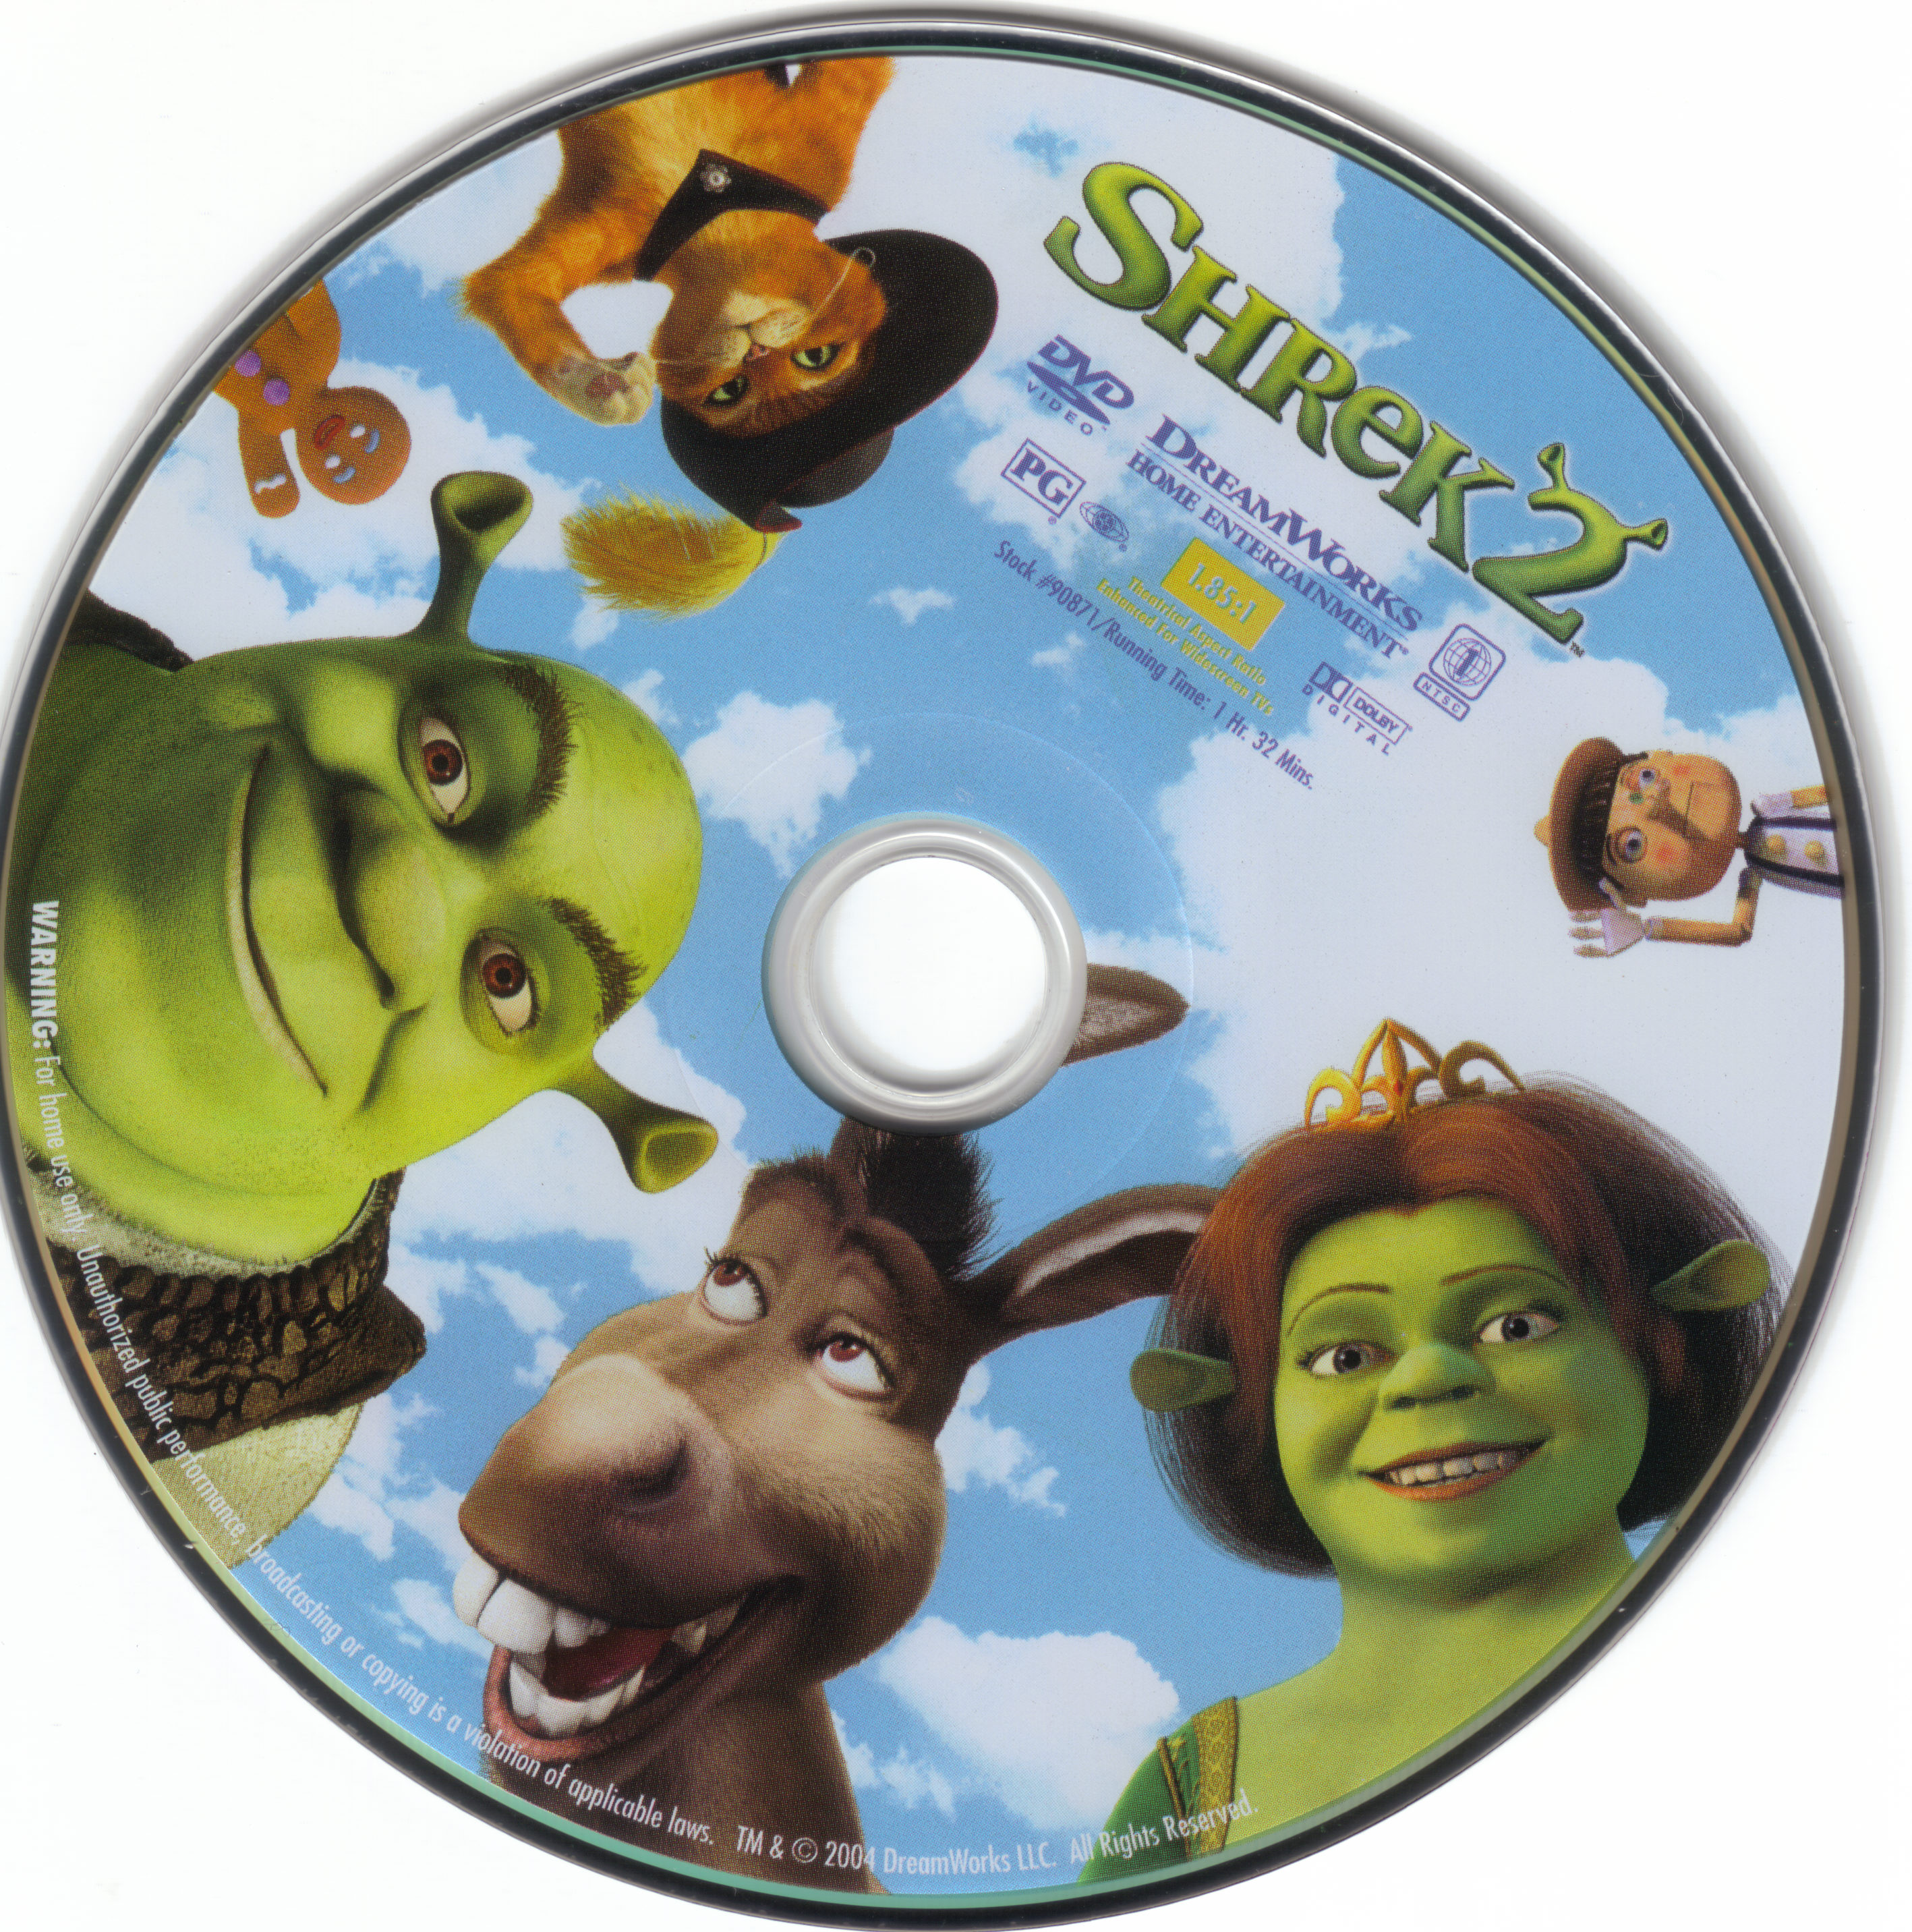 Covers Box Sk Shrek 2 2004 High Quality Dvd Blueray Movie